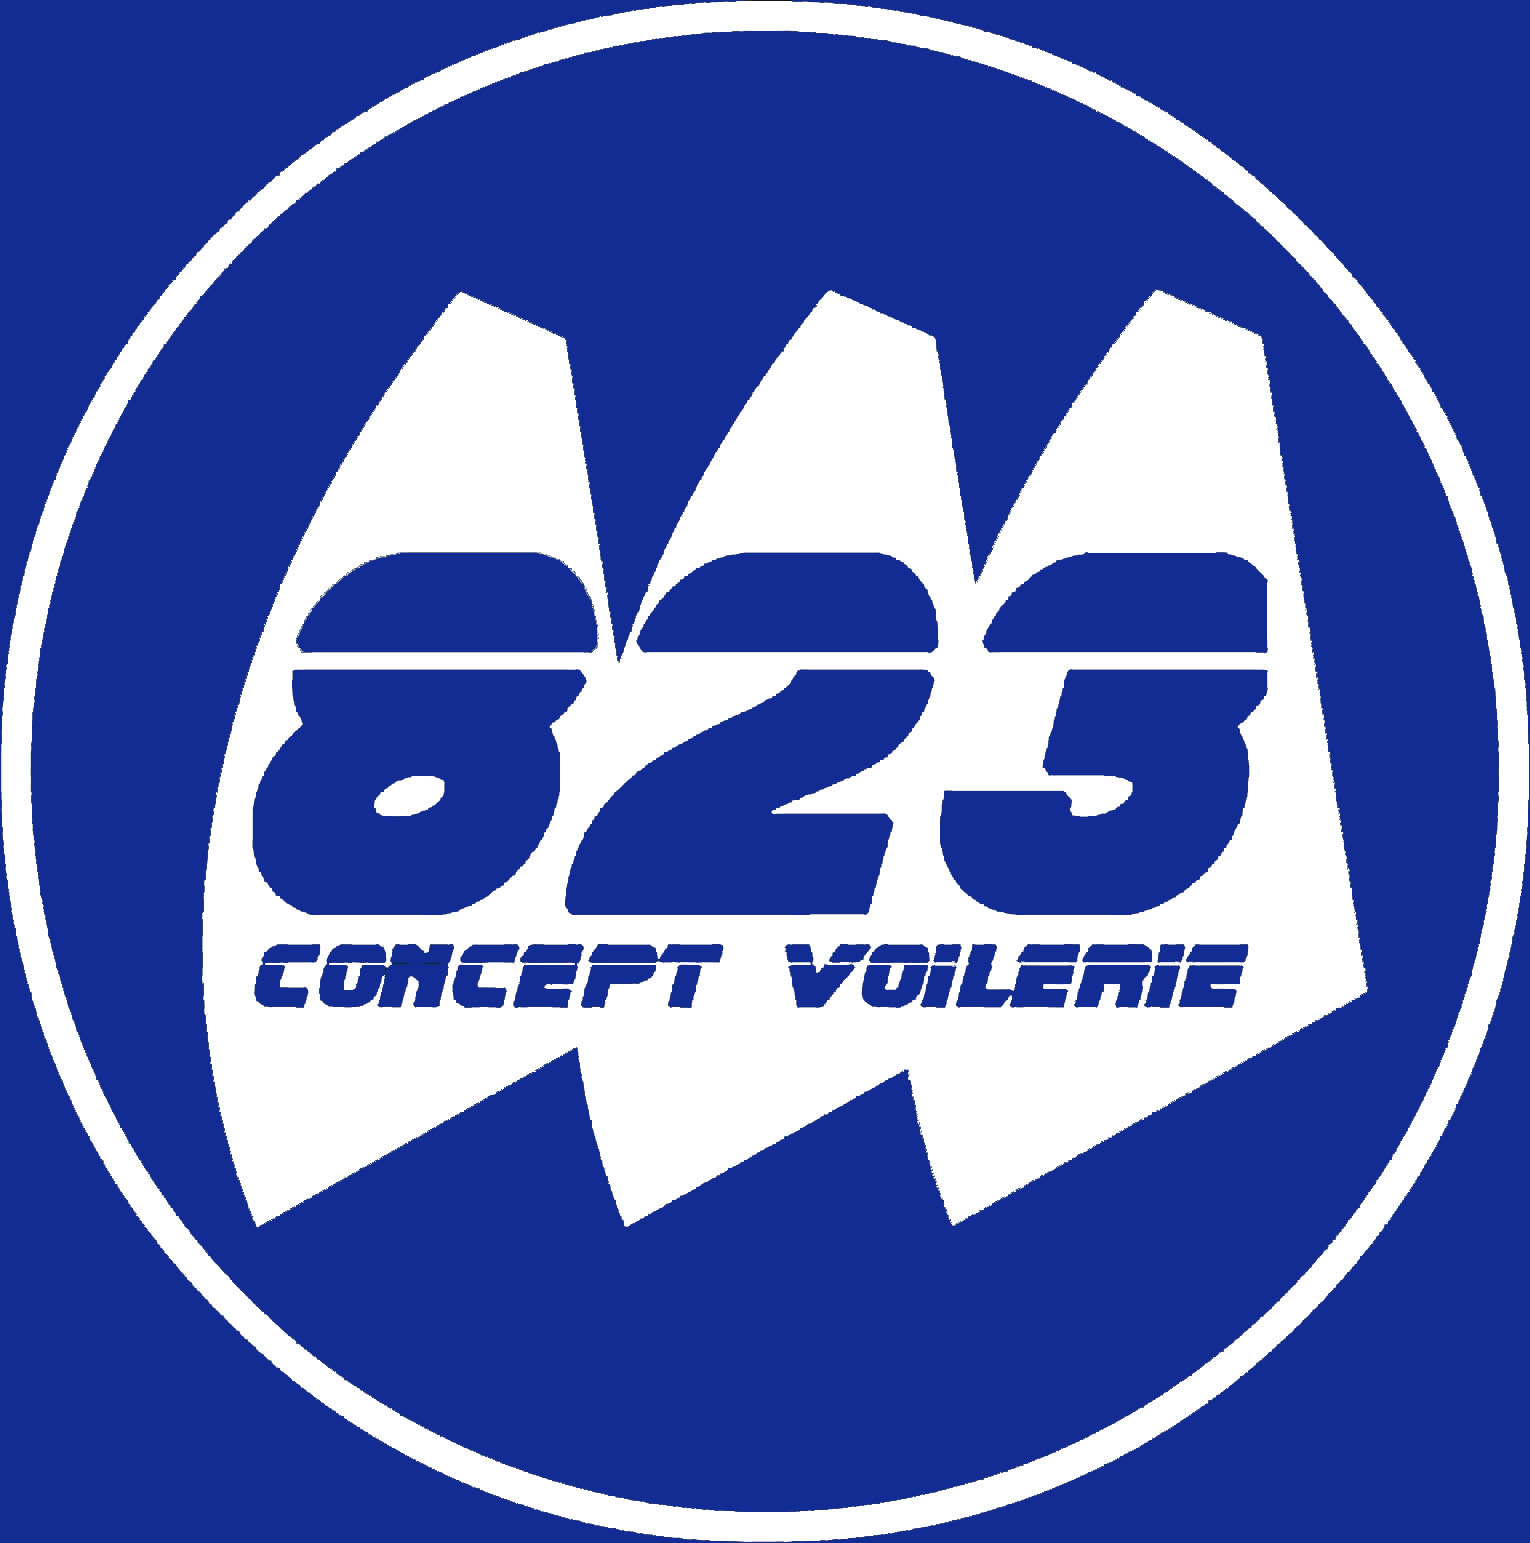 Voilerie 823 CONCEPT